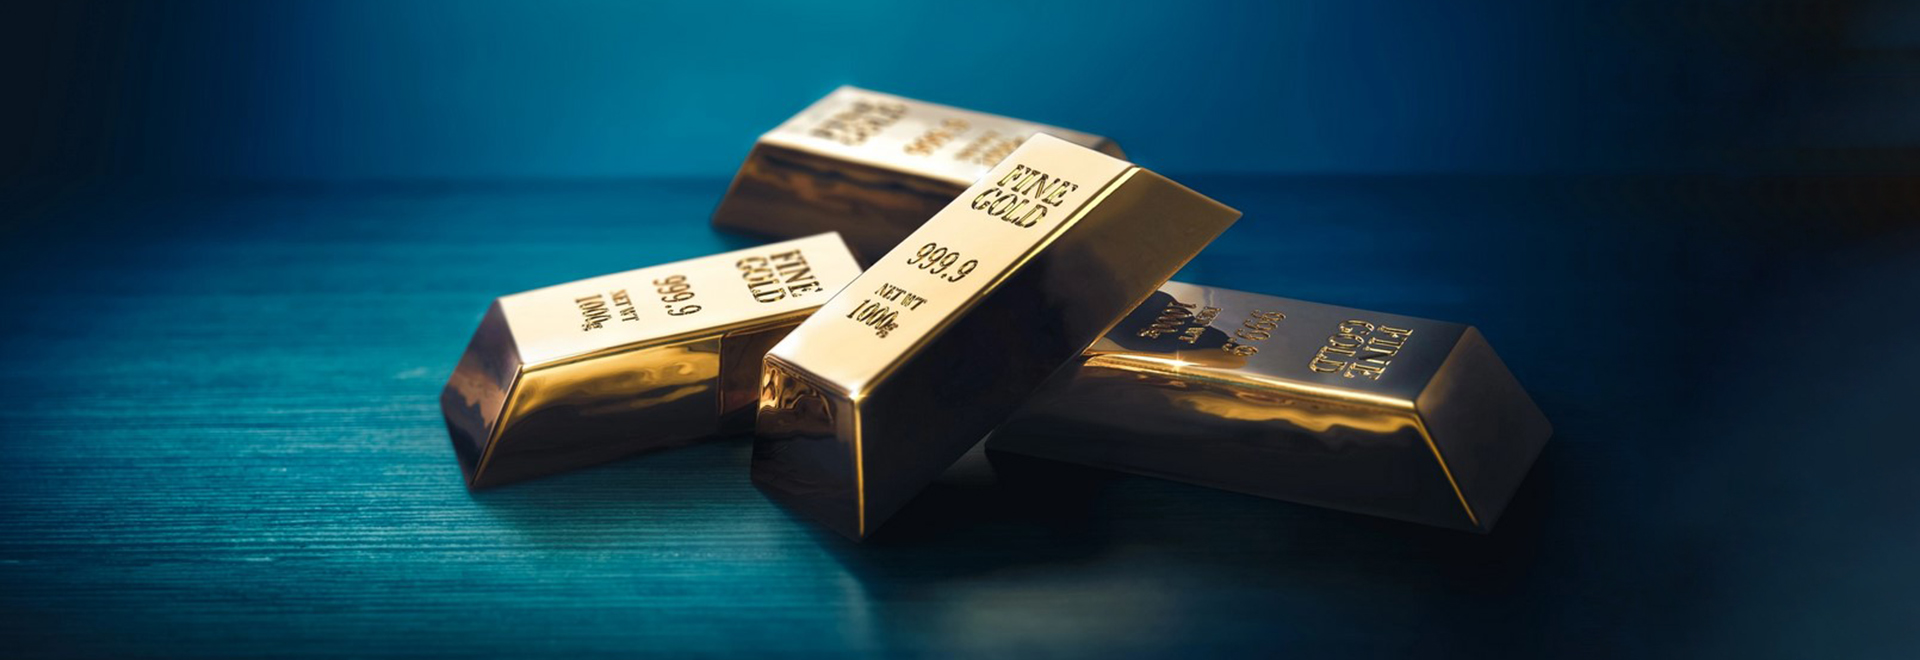 Cooper Metals Ltd Made Significant Advancements In Copper Gold